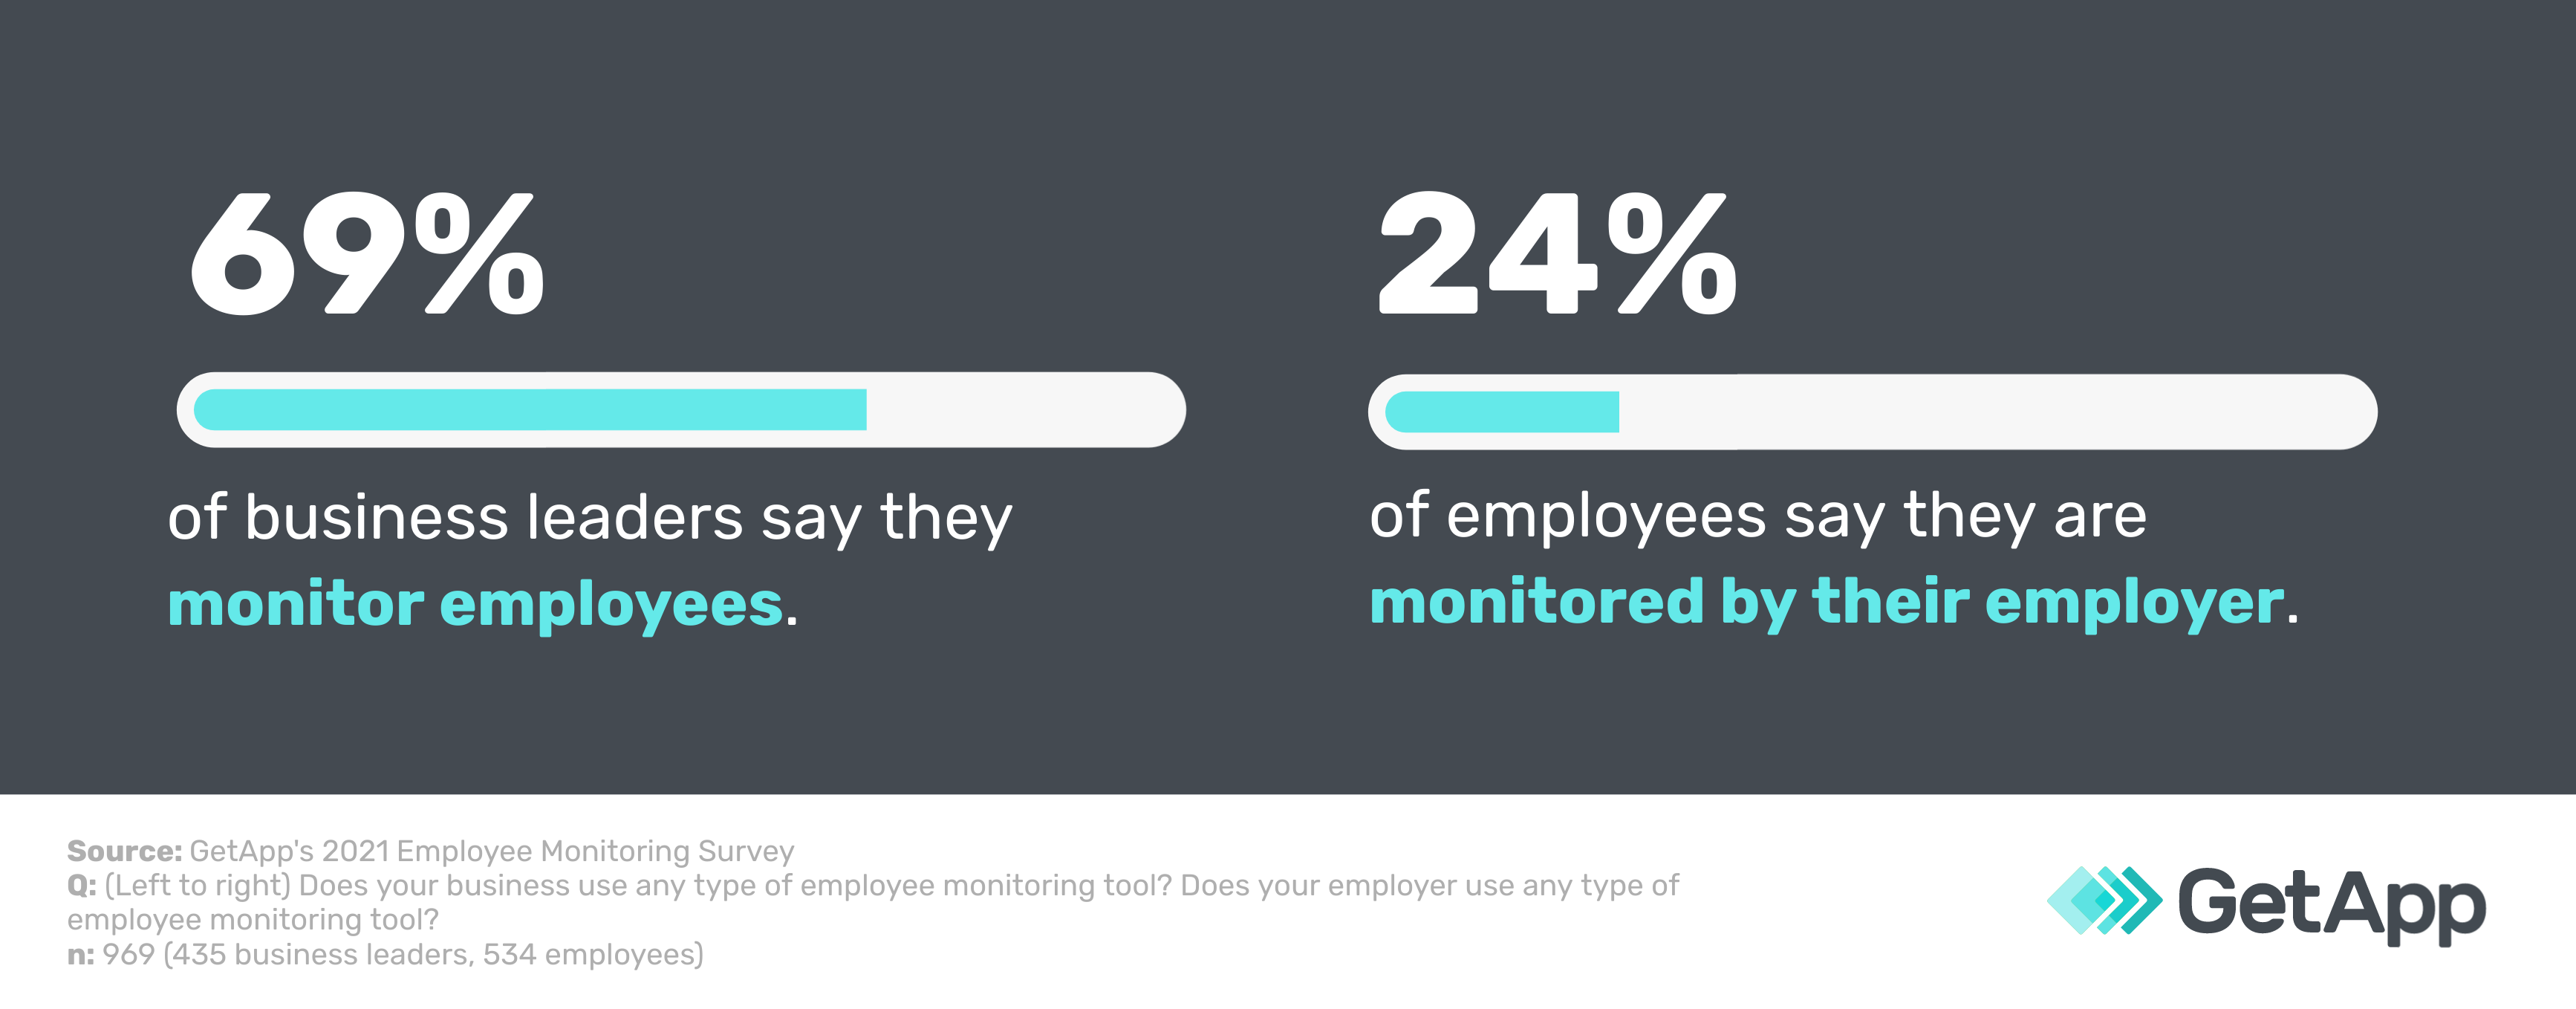 Employee vs Employer monitoring